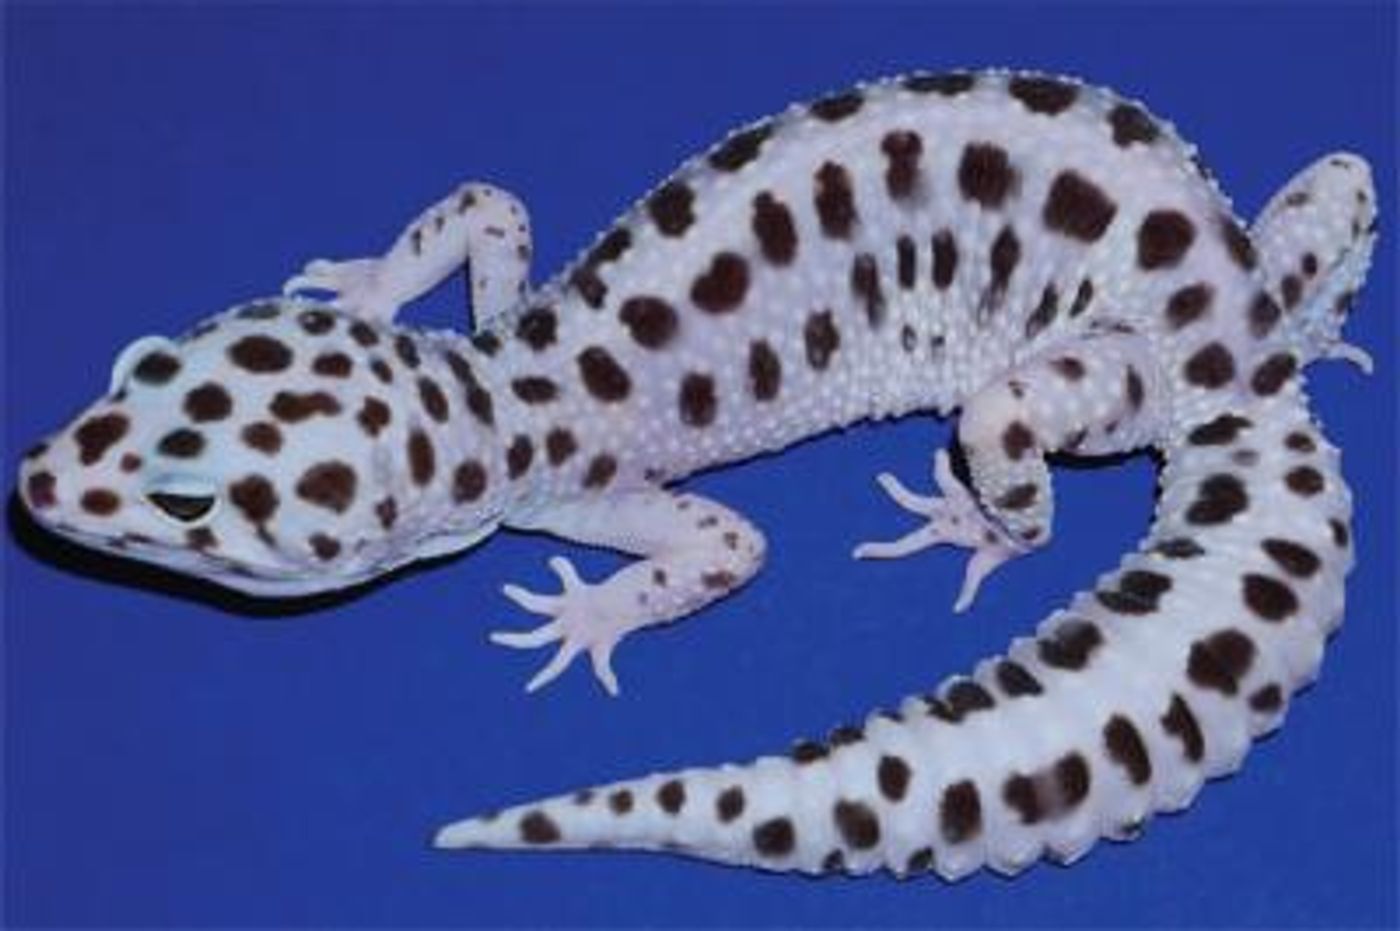 dwarf leopard gecko